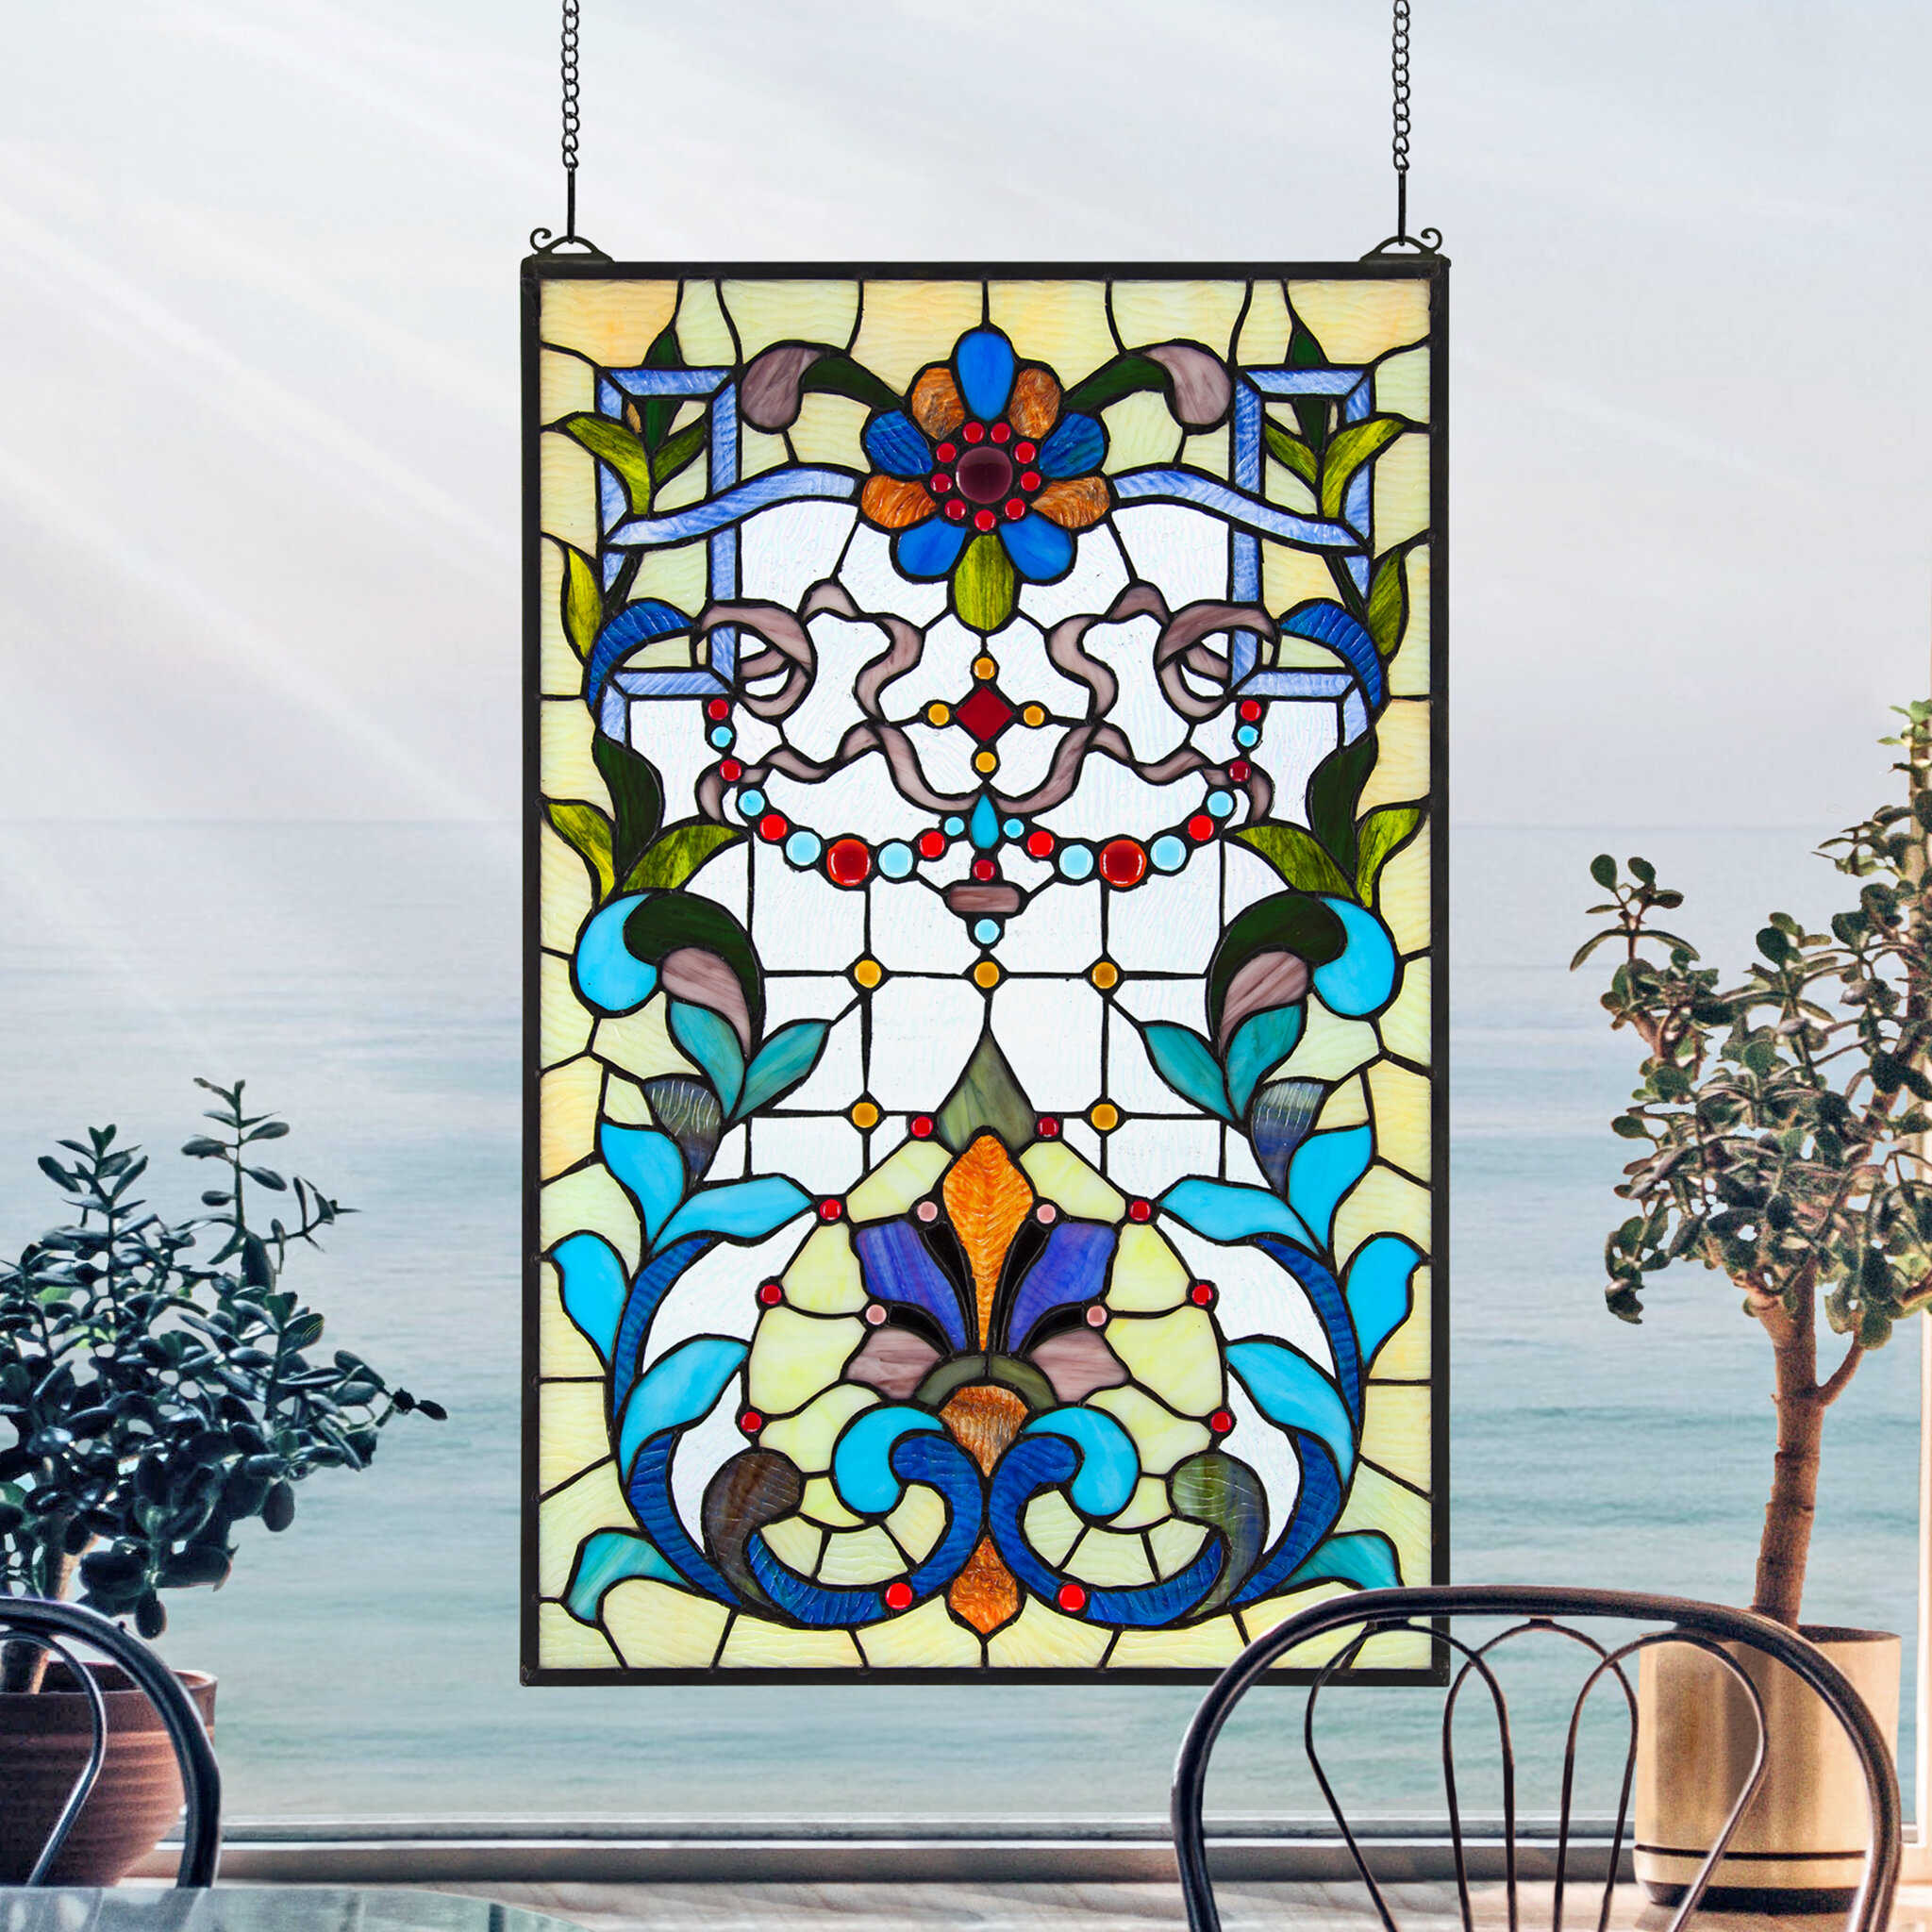 Decorative Leaded Glass Panels Sale Online - www.illva.com 1692917654